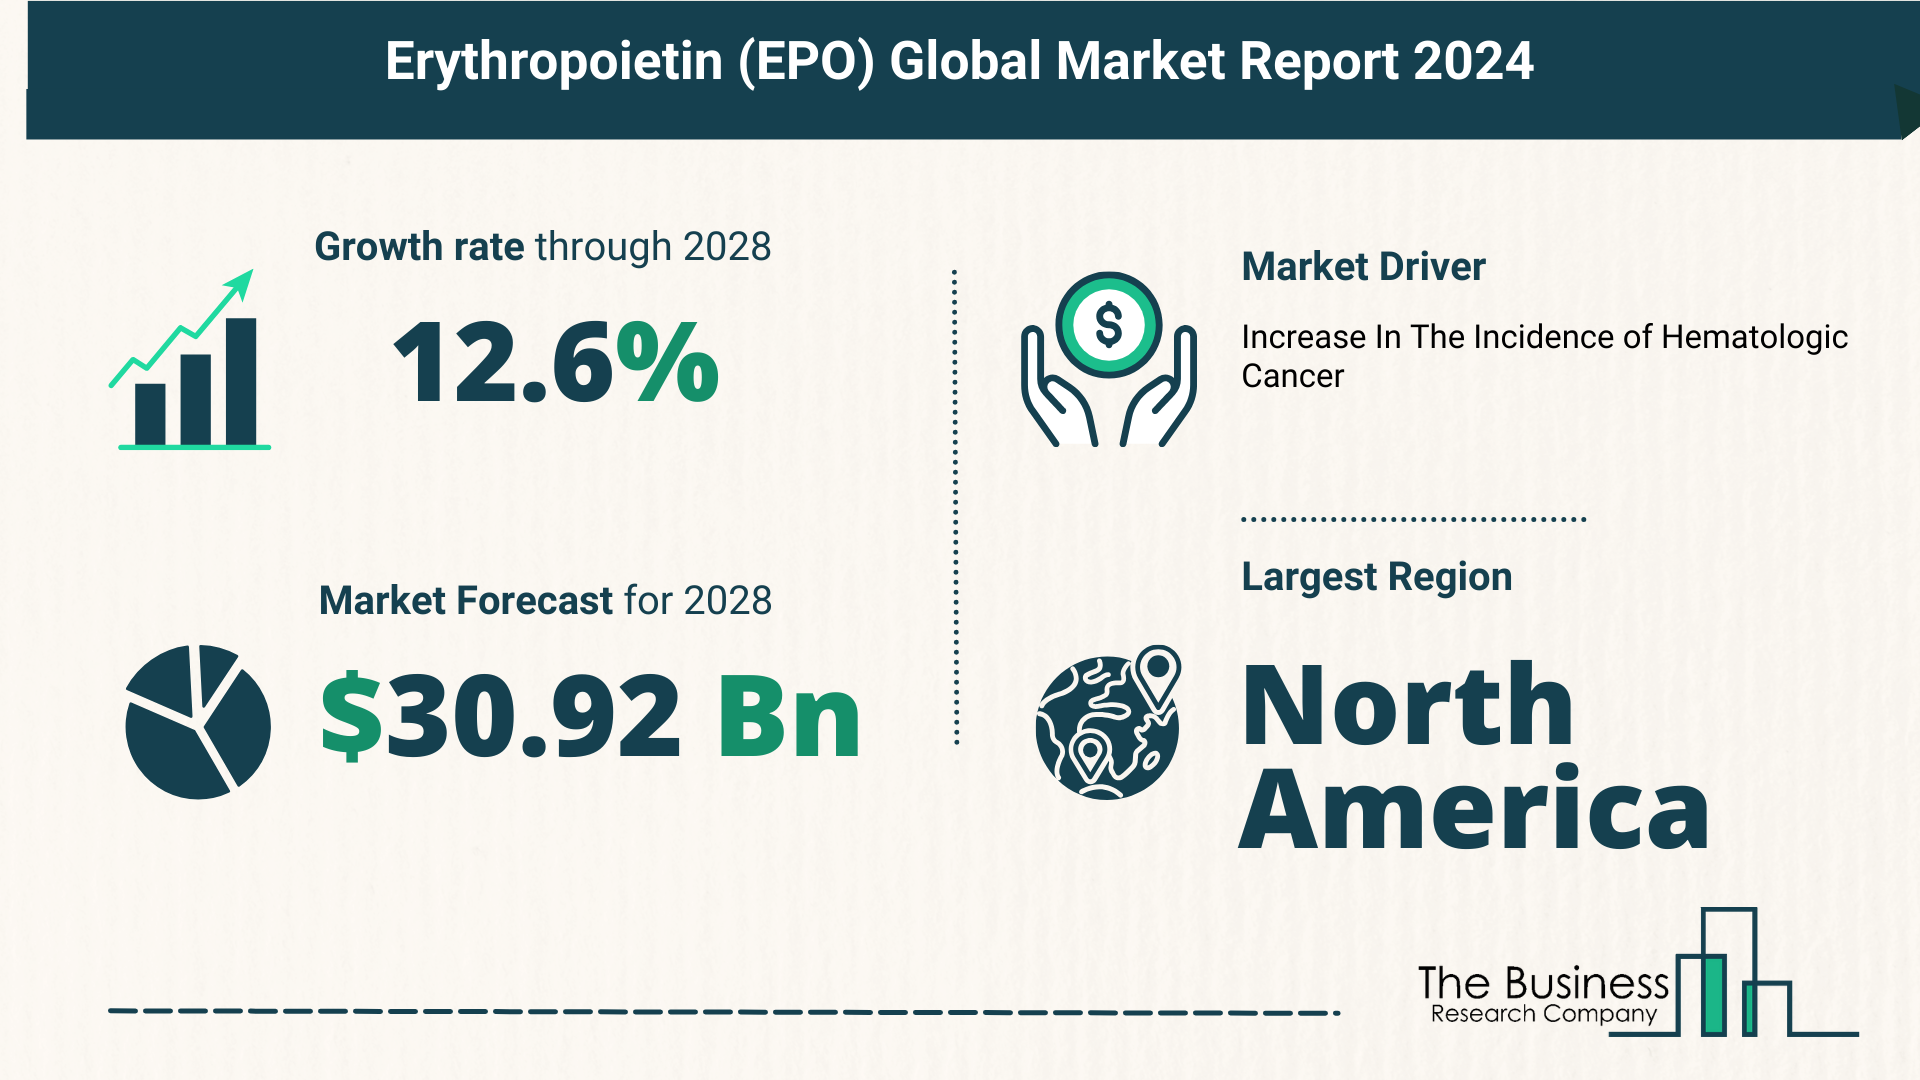 Key Takeaways From The Global Erythropoietin (EPO) Market Forecast 2024